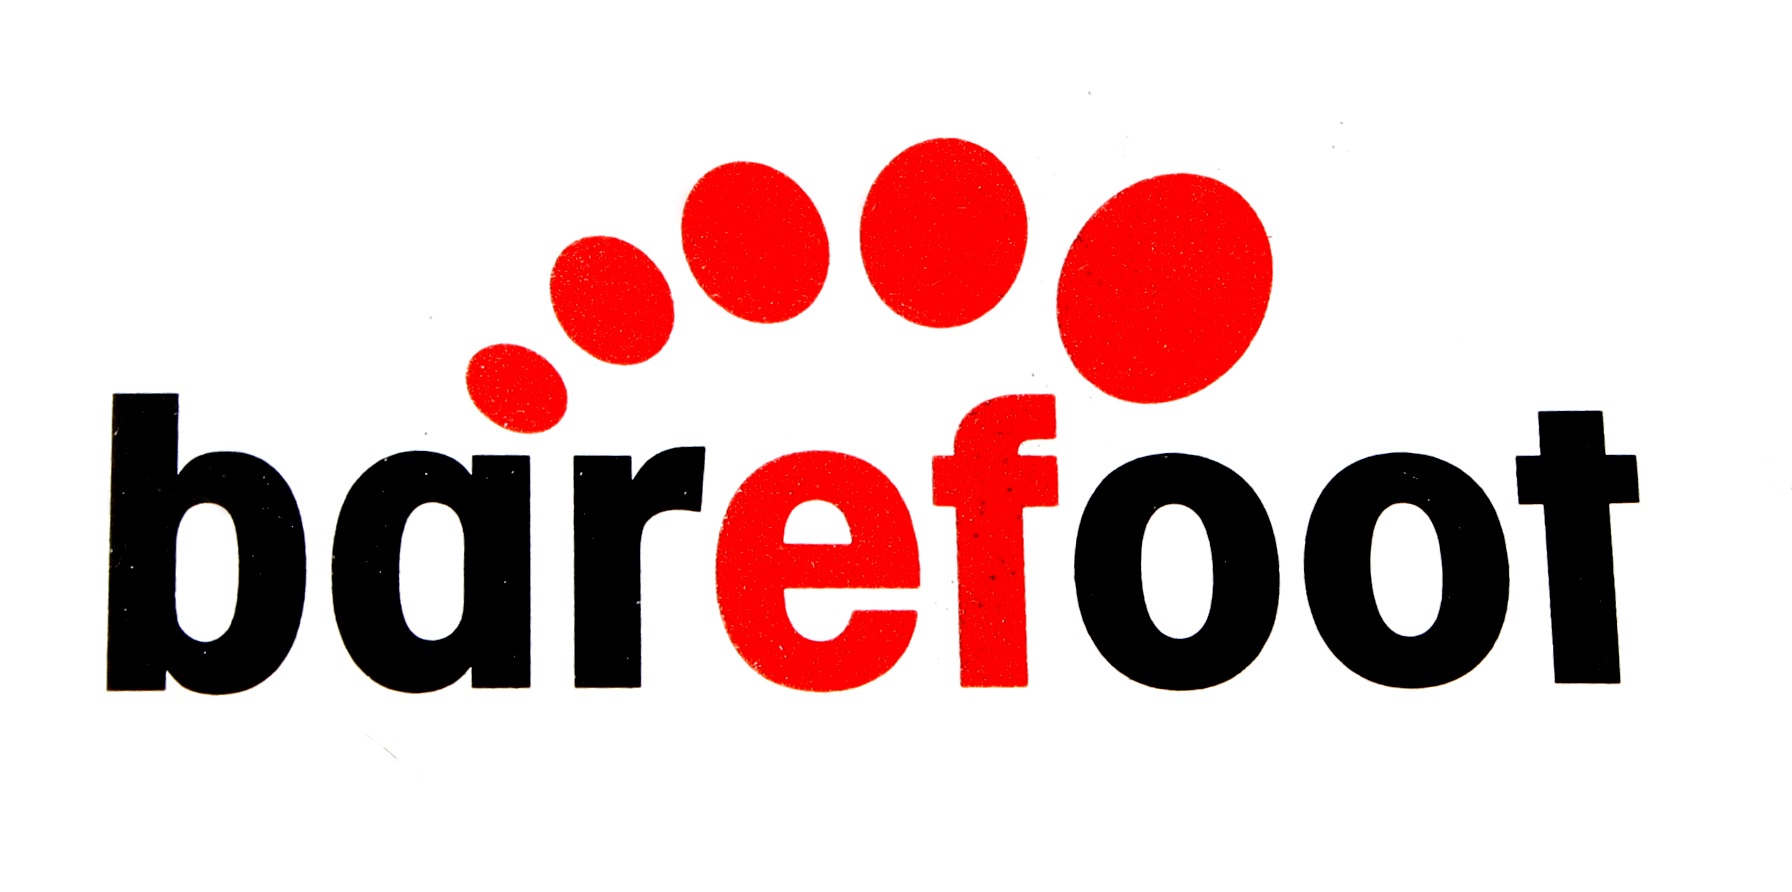 ef barefoot logo obuvame.sk